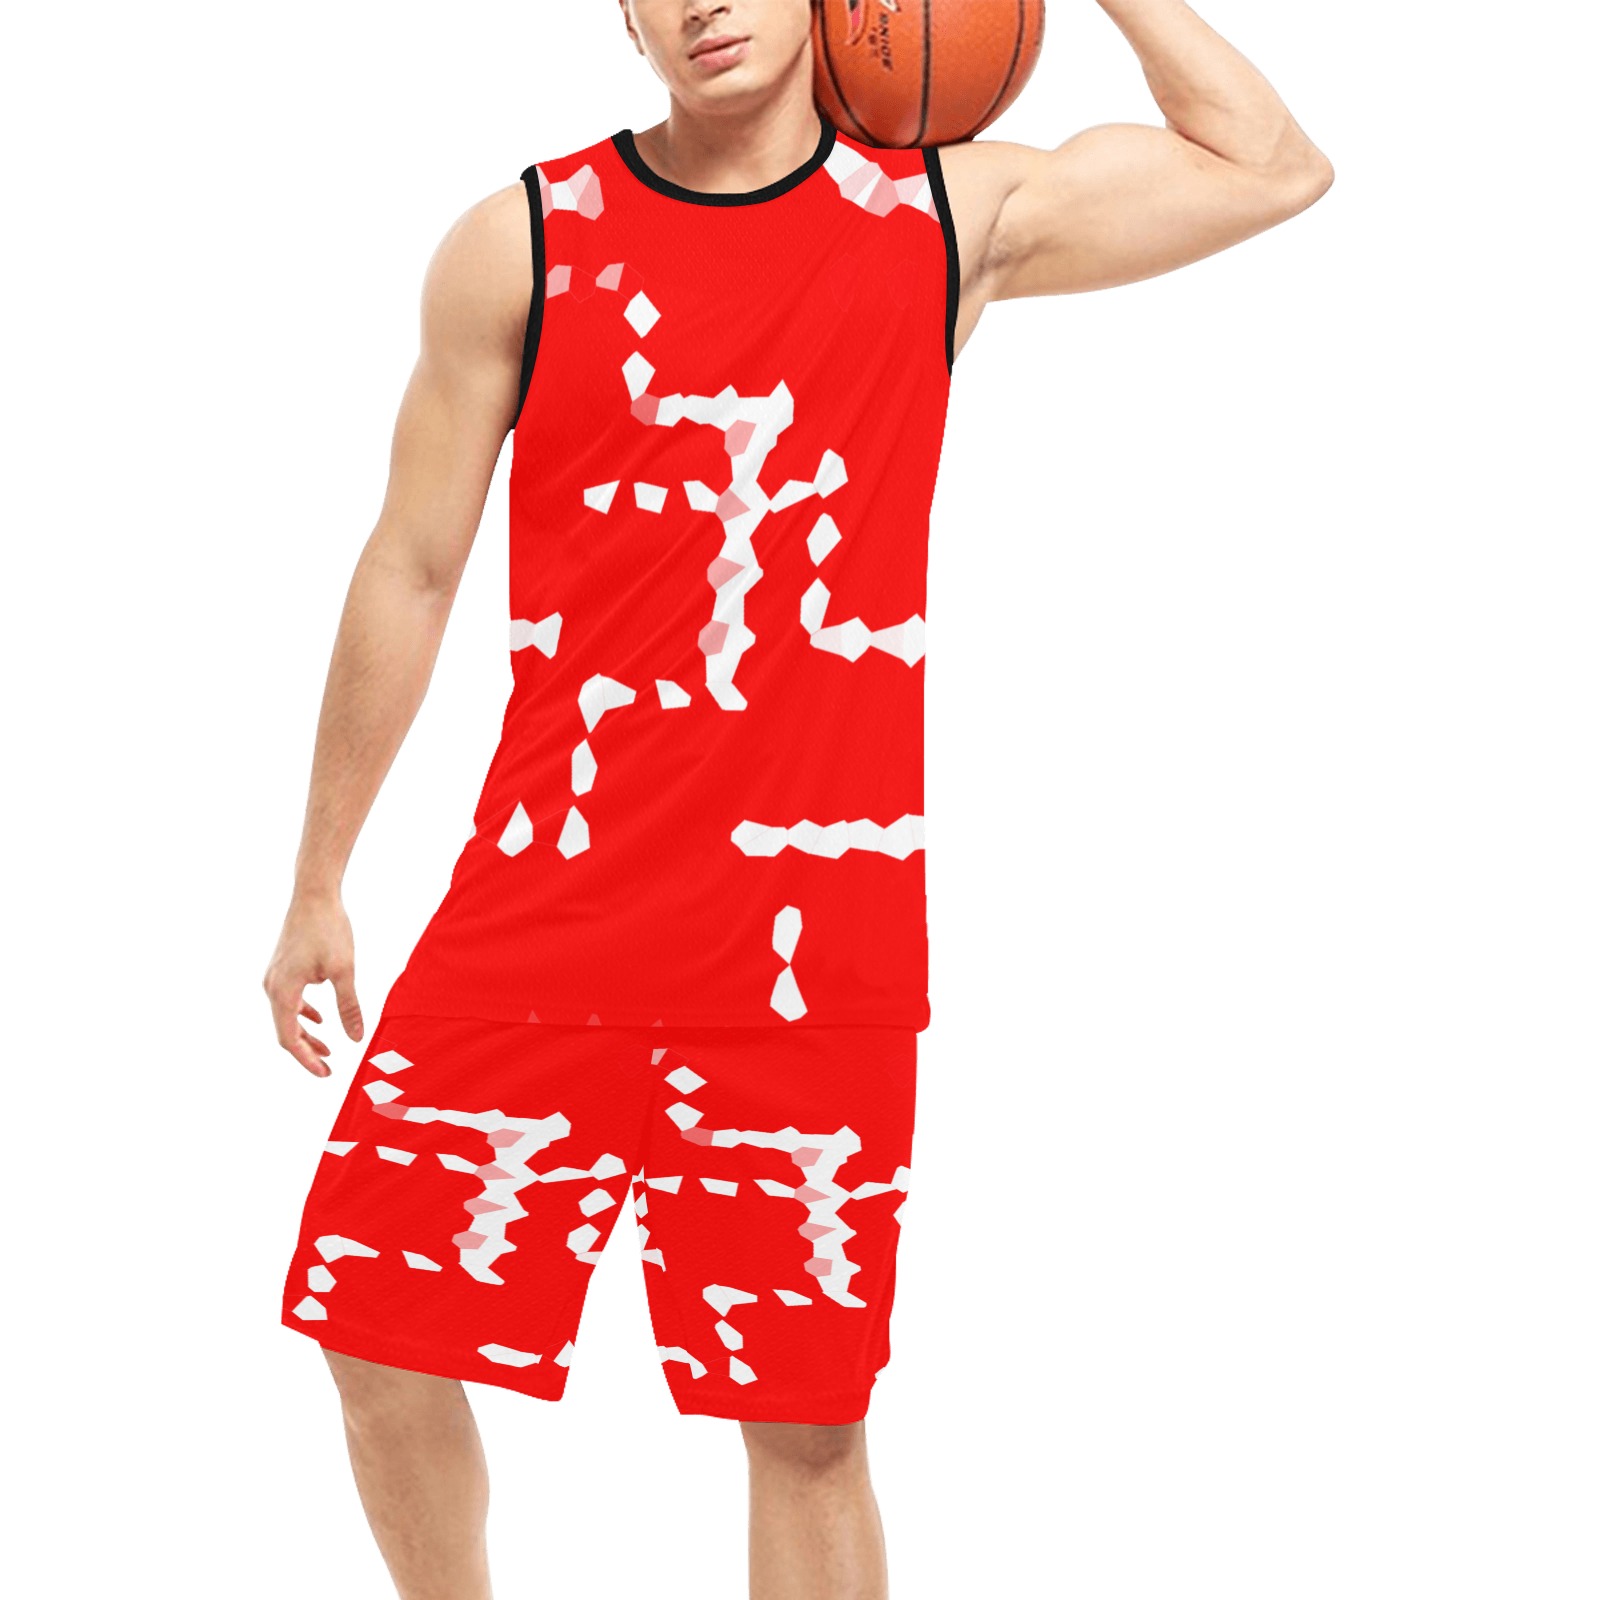 White InterlockingCrosses Mosaic Red Basketball Uniform with Pocket